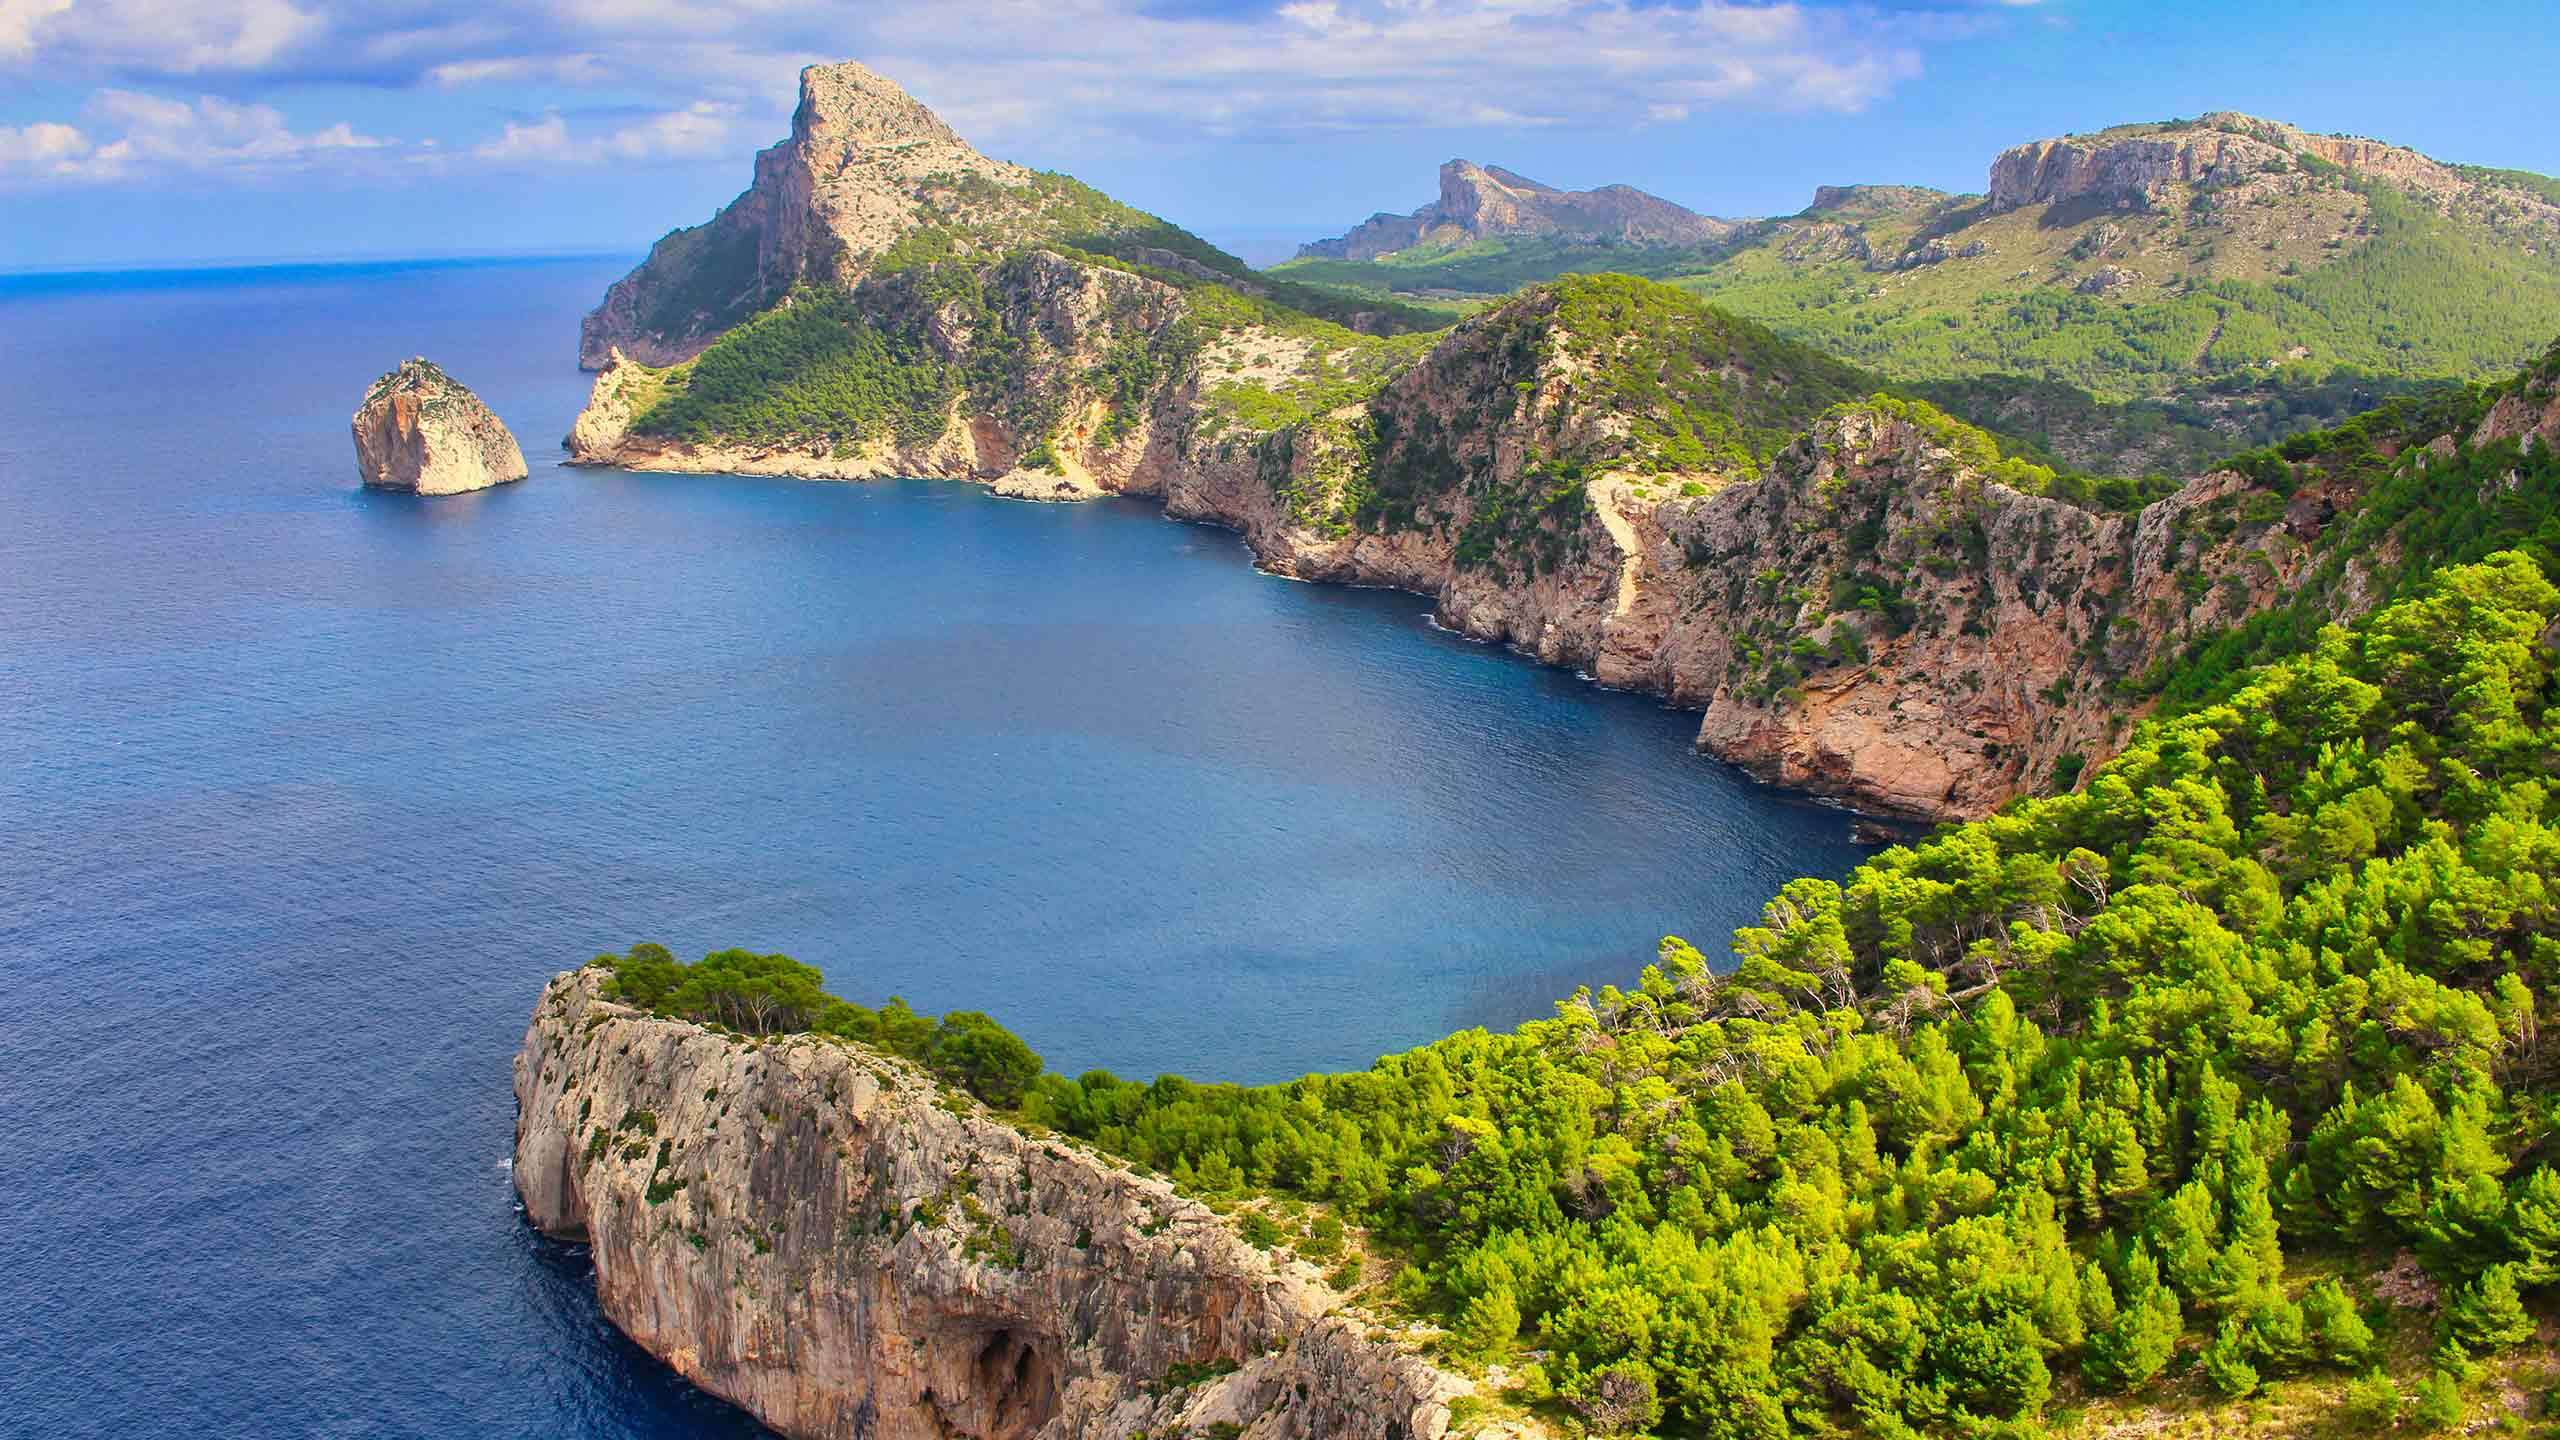 Luxury Spain Mallorca & Menorca Walk 6D5N (Majestic Mediterranean Peaks & Island Coves), Fully Guided